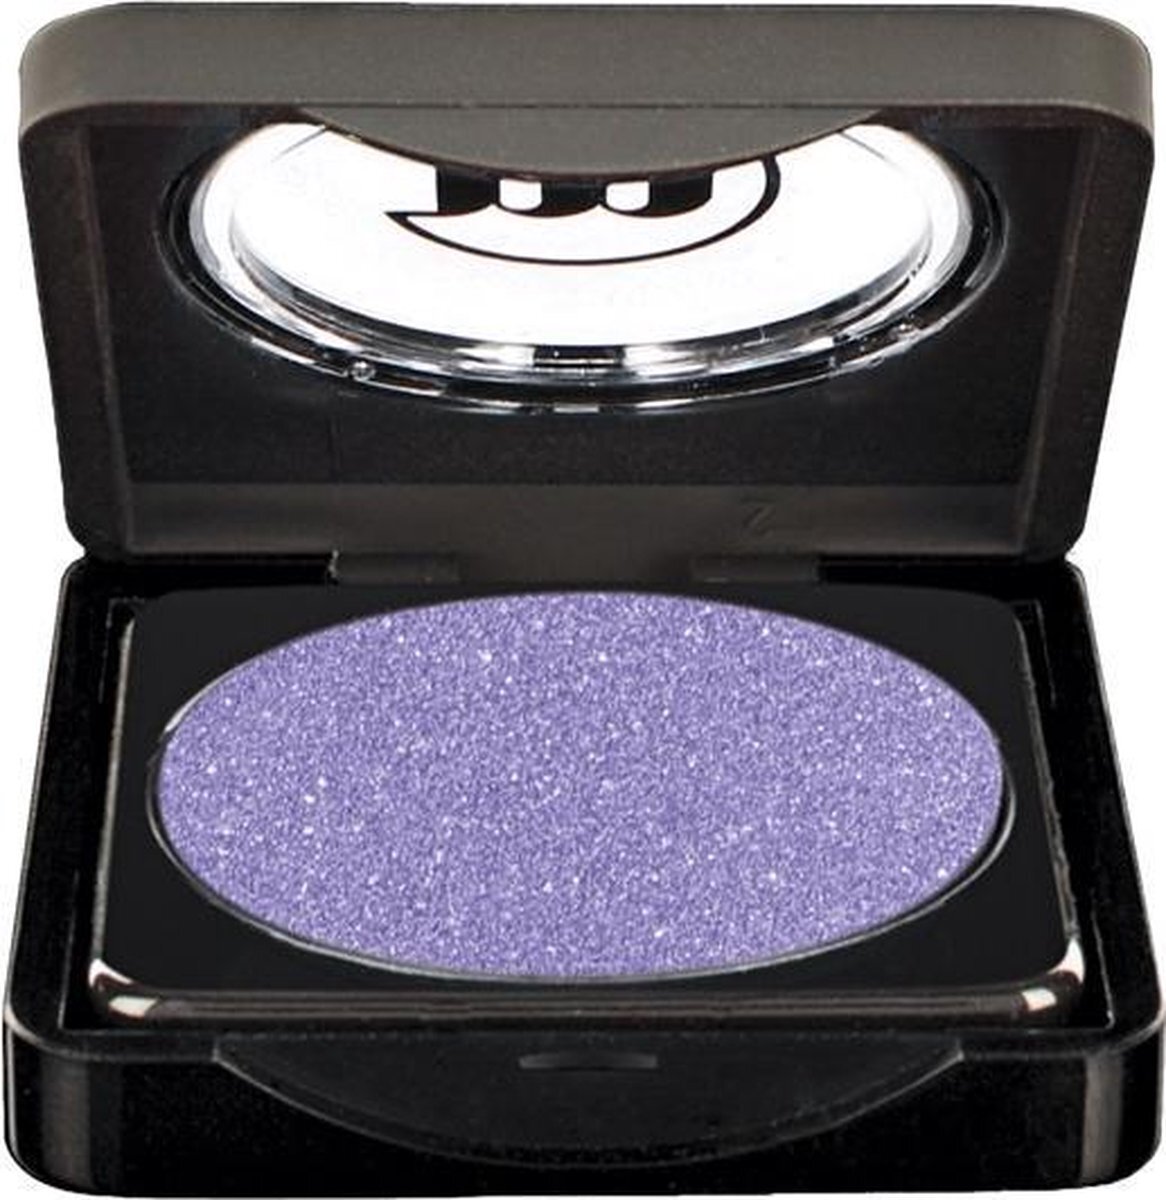 Make-up Studio Eyeshadow Super Frost - Mystique Purple